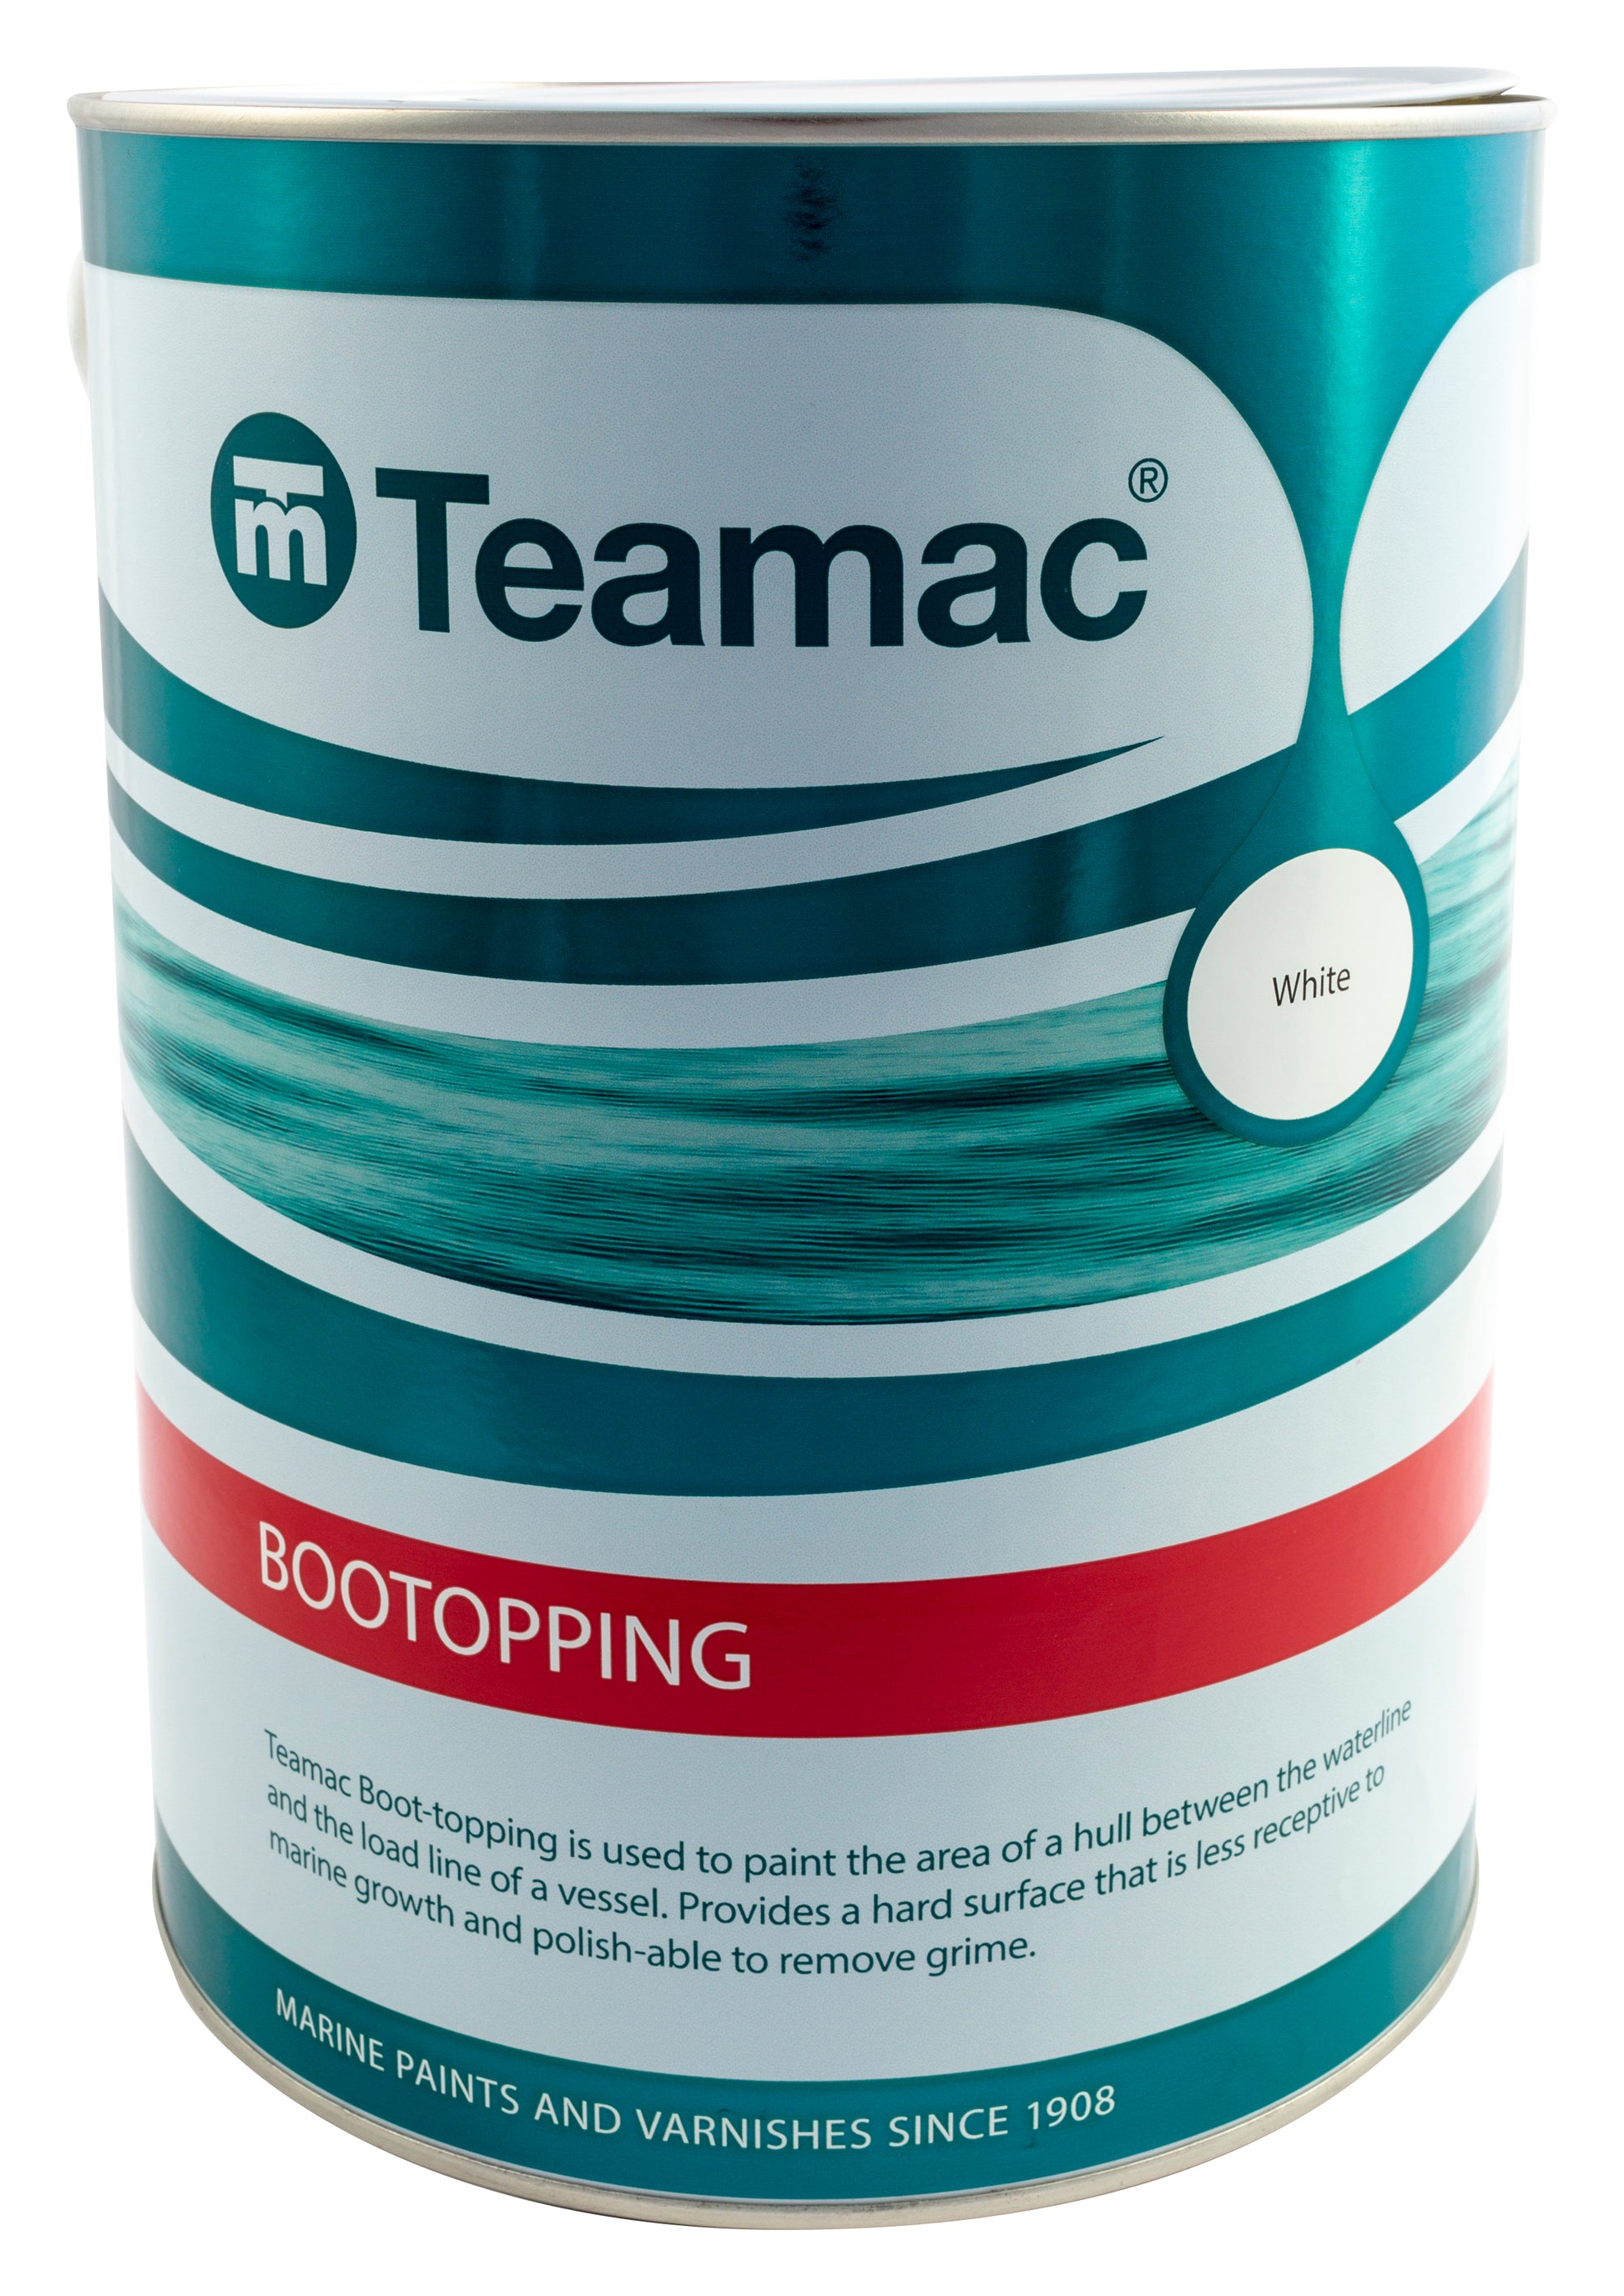 teamac-marine-bootopping